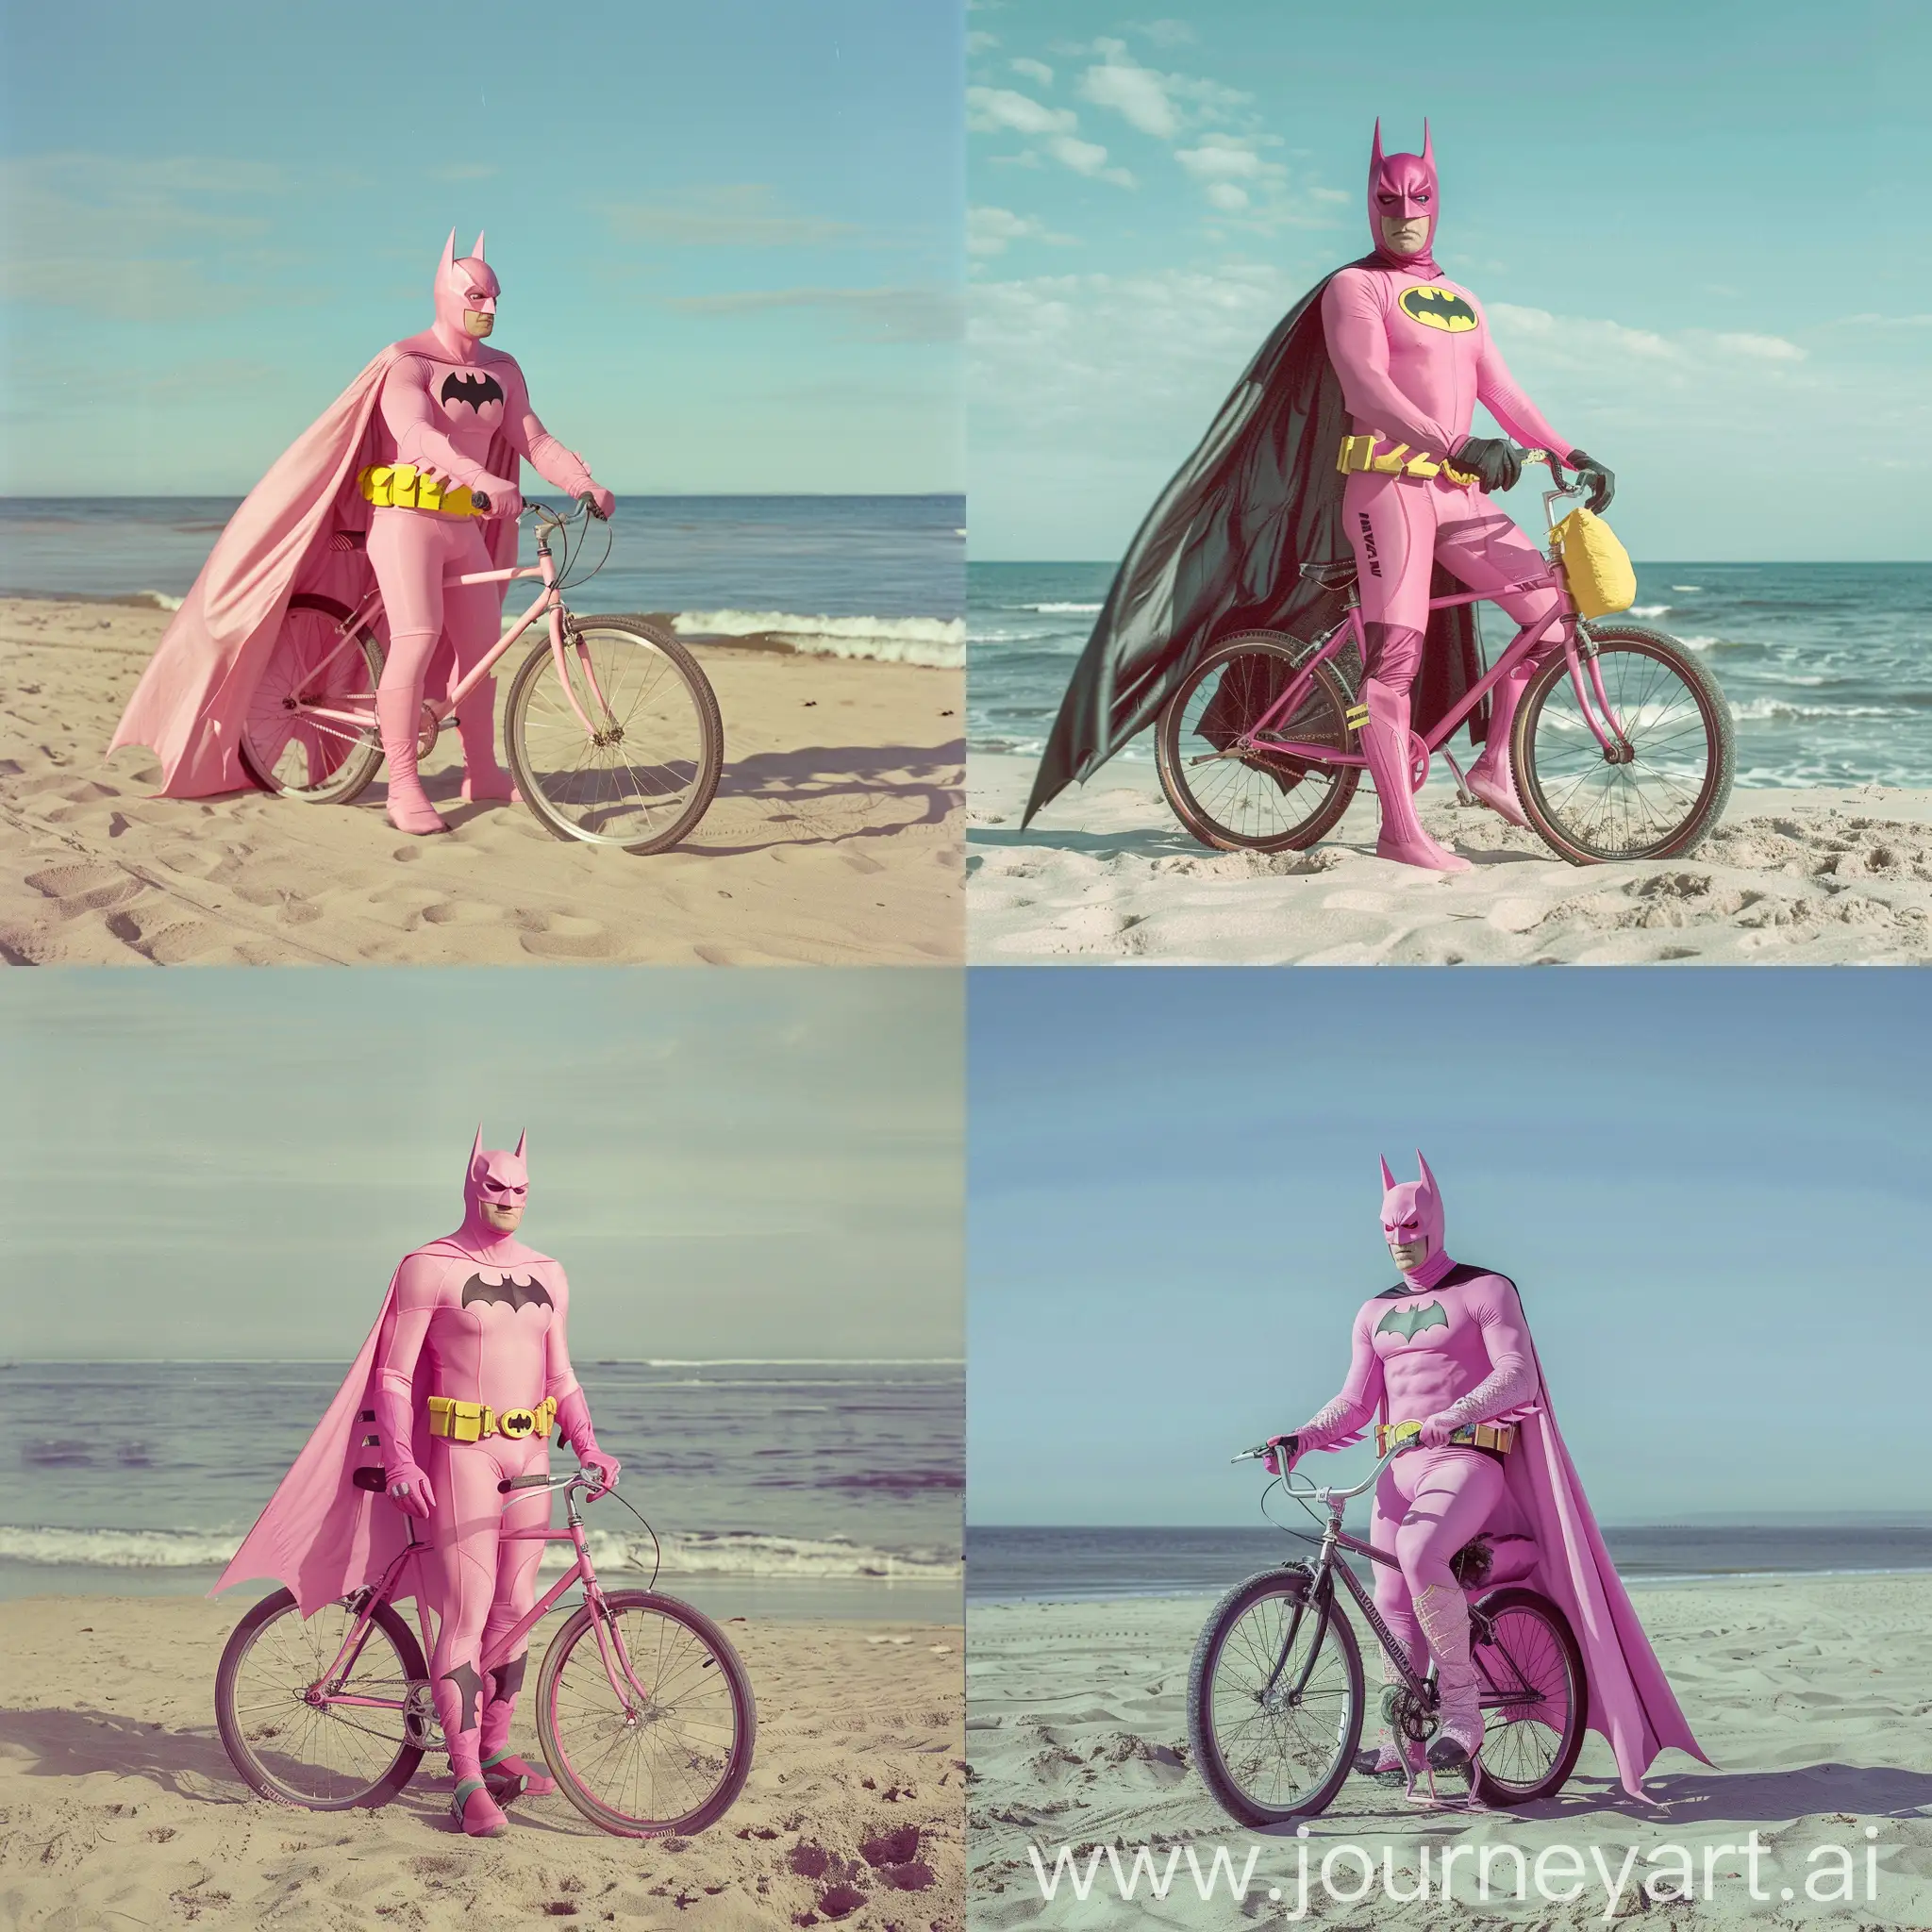 Pink batman on beach on bicyle